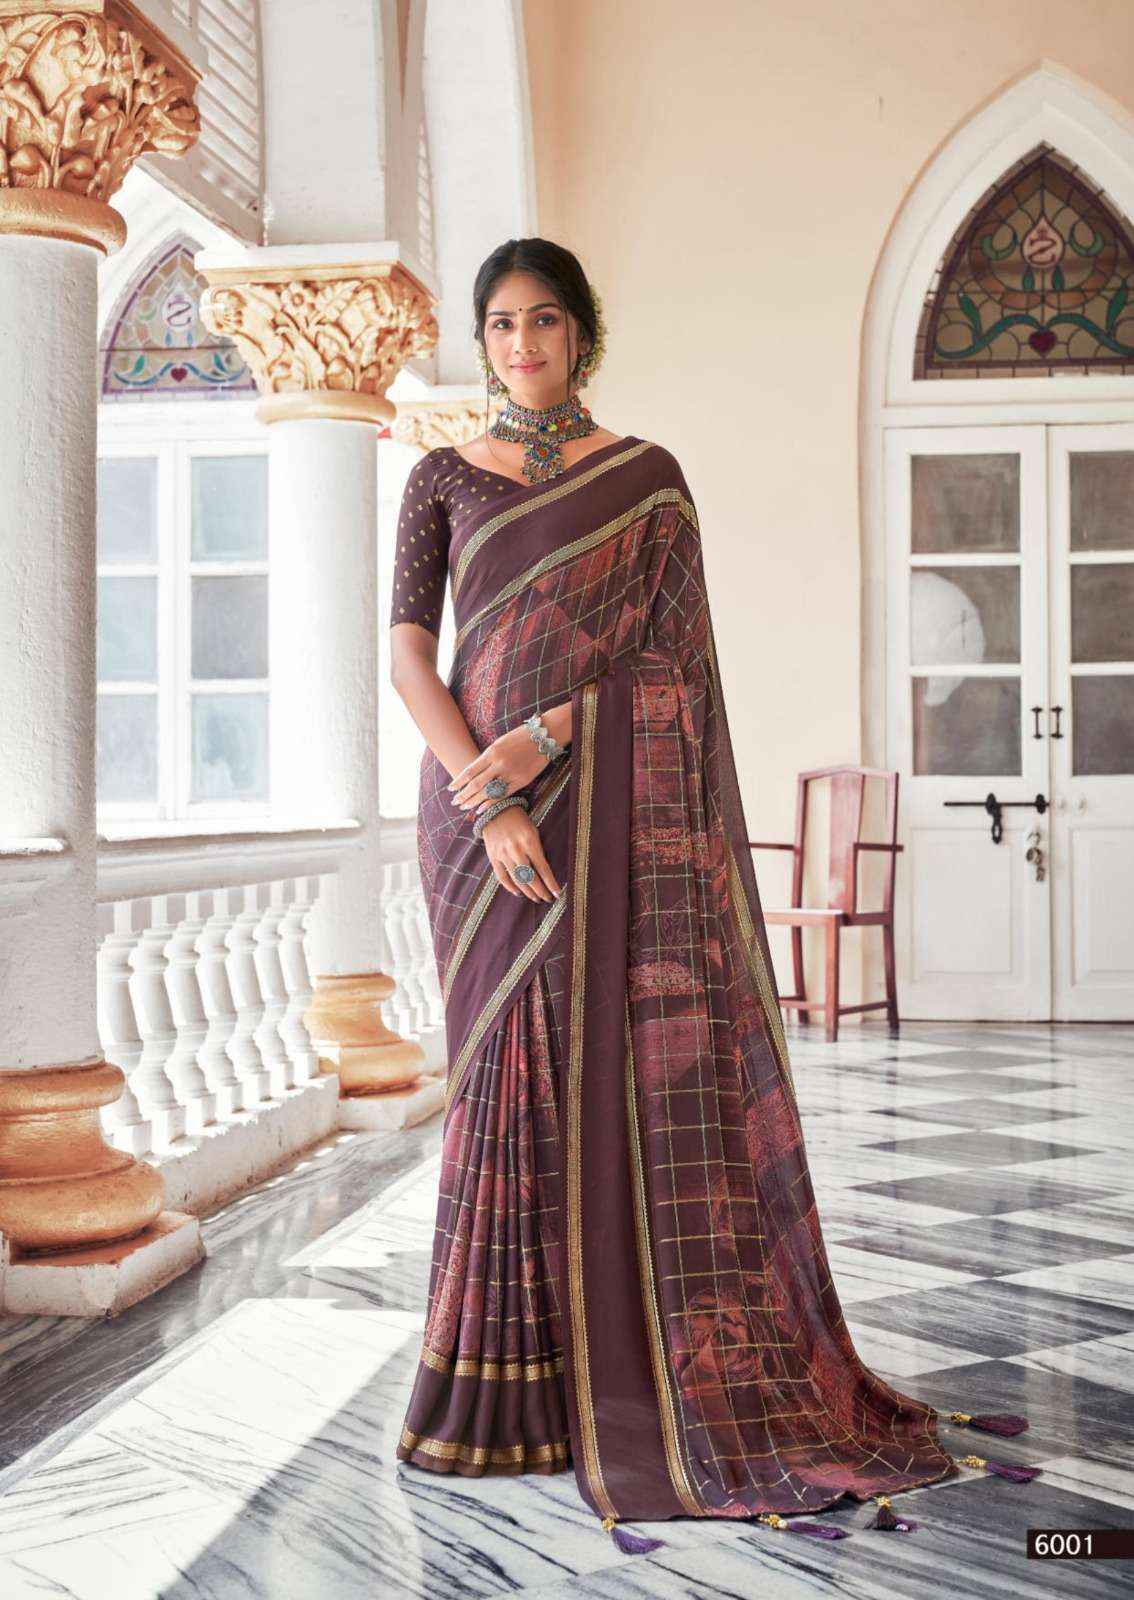 kashvi creation ajnabee beautiful sarees -Wholesale Factory Price